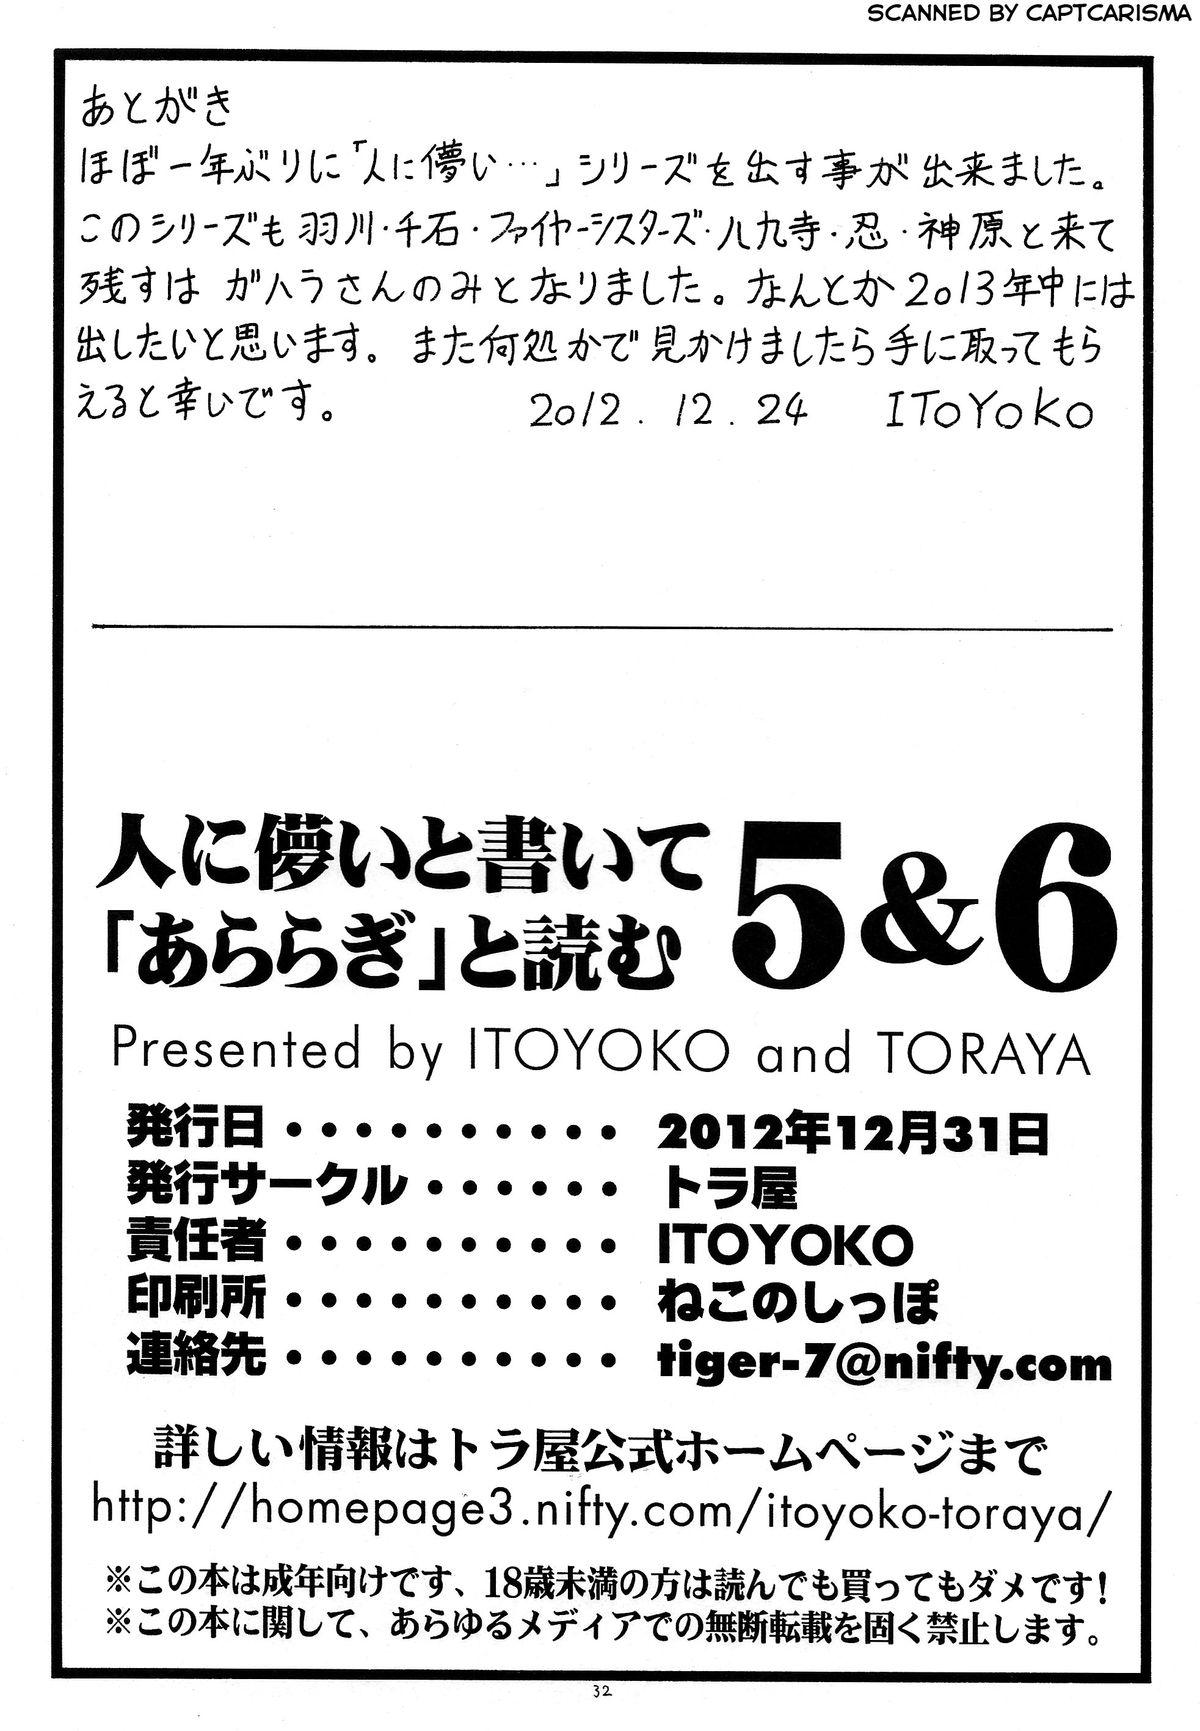 Amateurs Hito ni Hakanai to Kaite "Araragi" to Yomu 5&6 - Bakemonogatari Lovers - Page 34